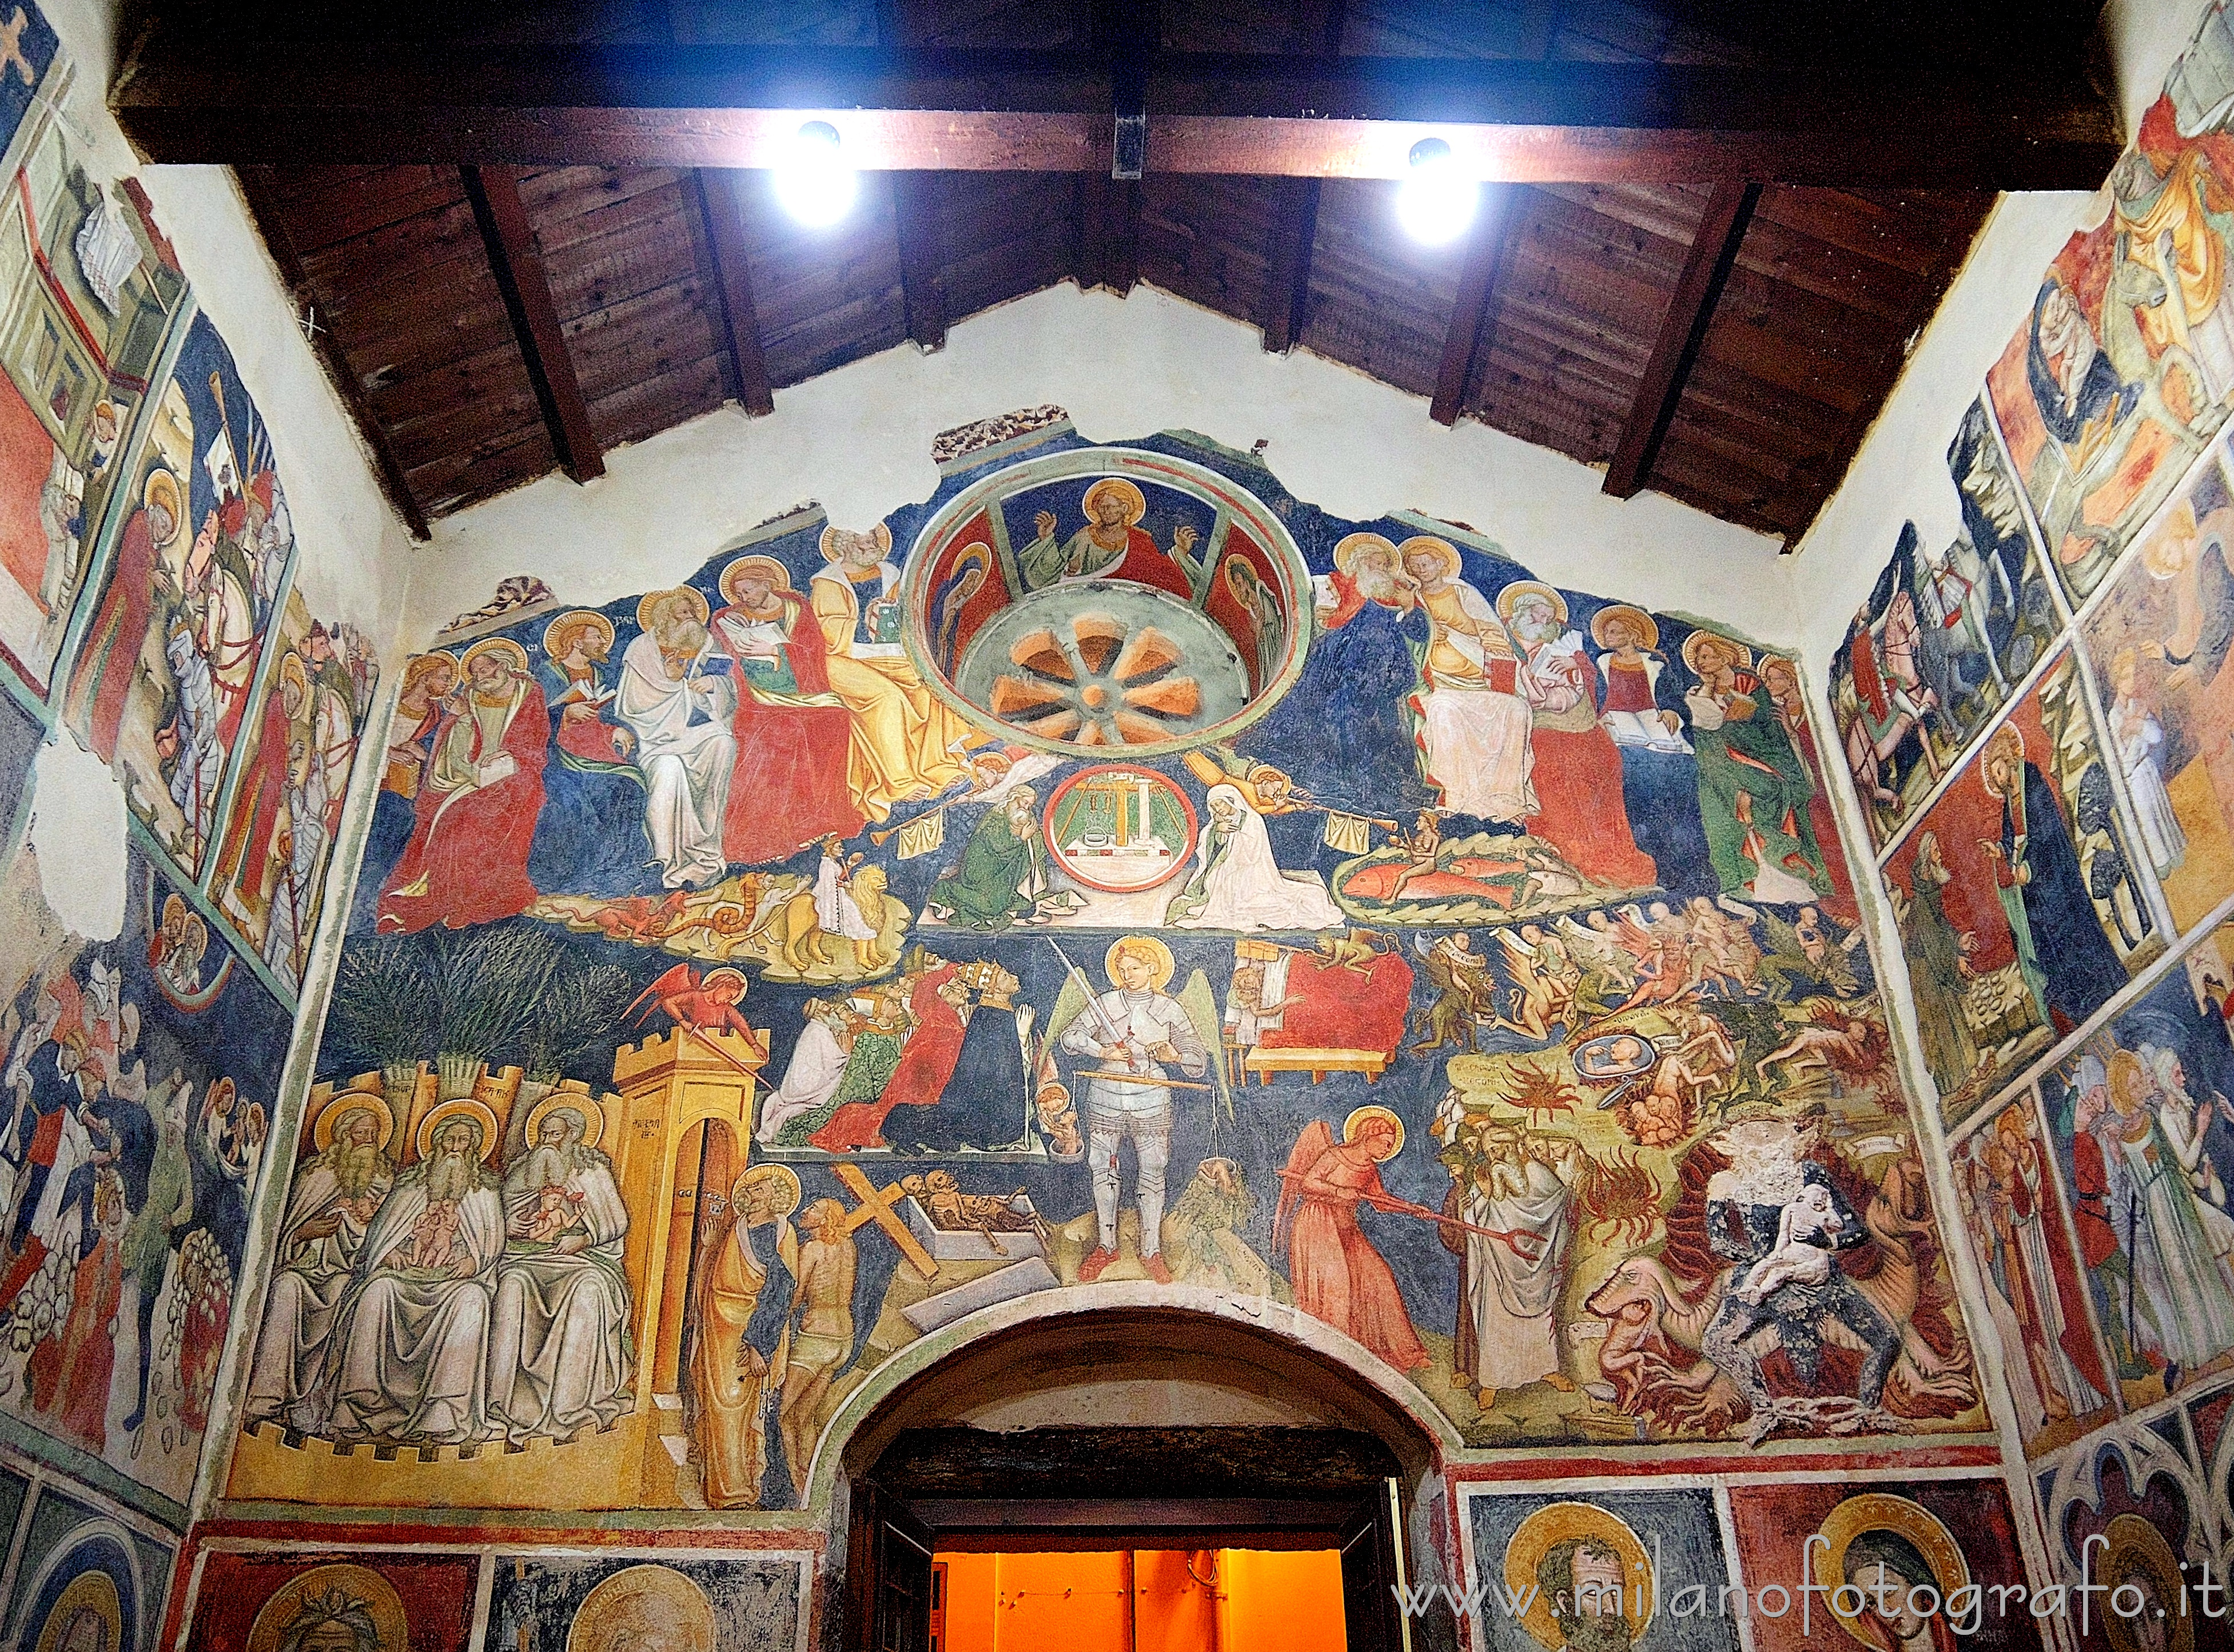 Soleto (Lecce, Italy): Counterfacade of the Church of Santo Stefano - Soleto (Lecce, Italy)